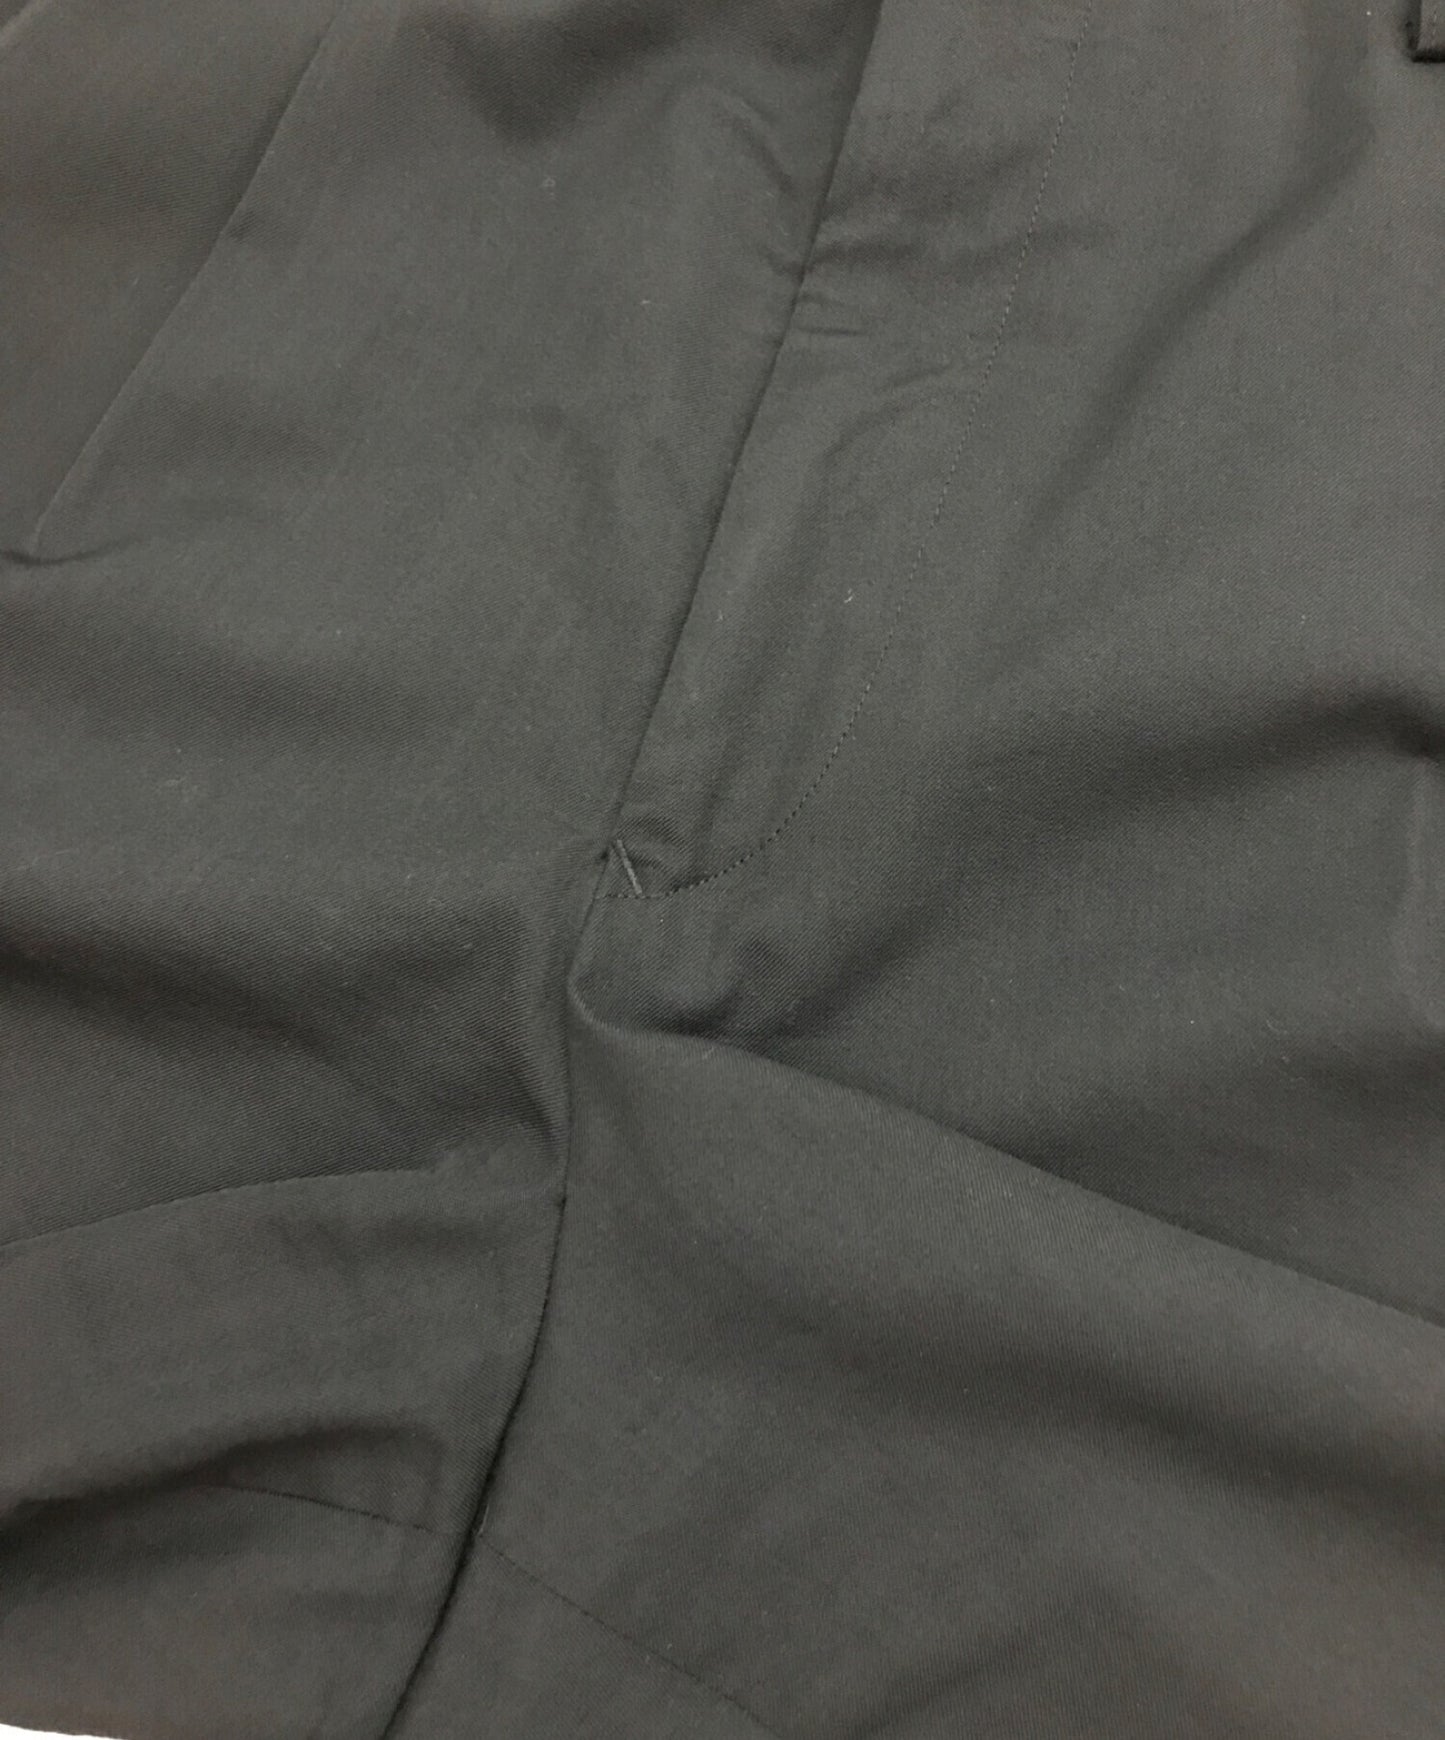 [Pre-owned] Yohji Yamamoto pour homme Wool tuck pants HE-P51-114